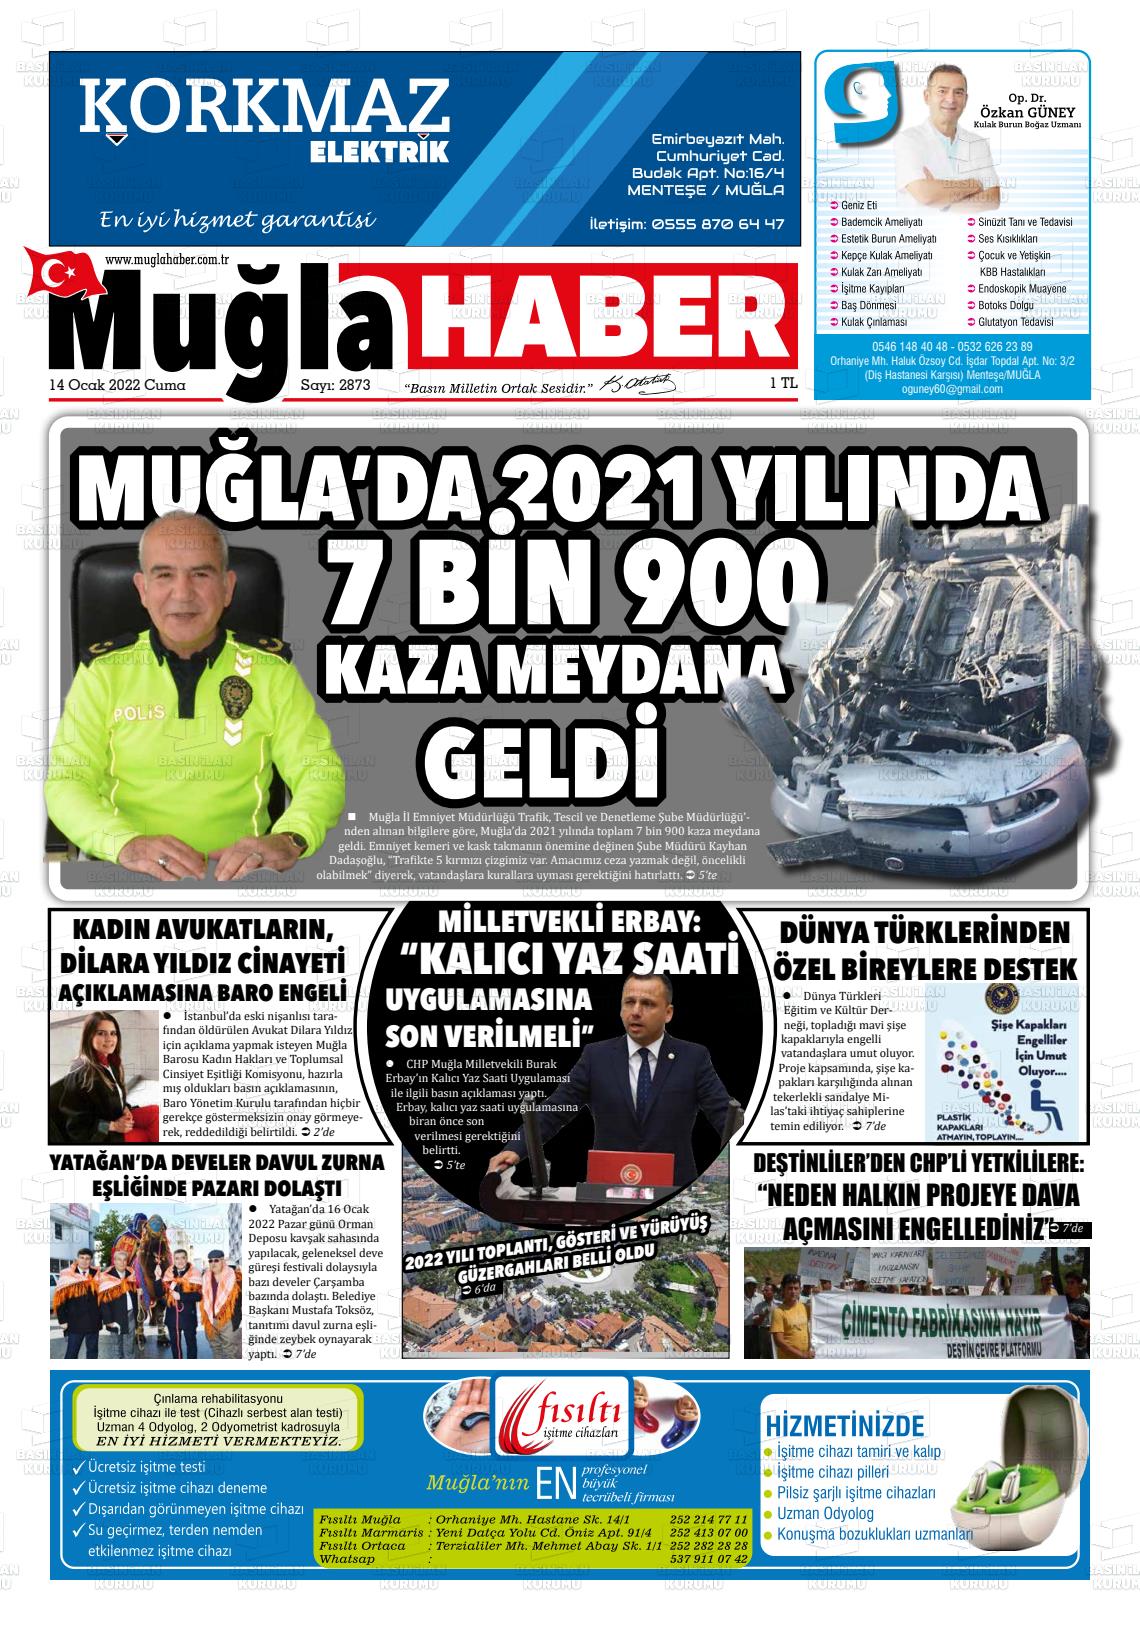 14 Ocak 2022 Muğla Haber Gazete Manşeti